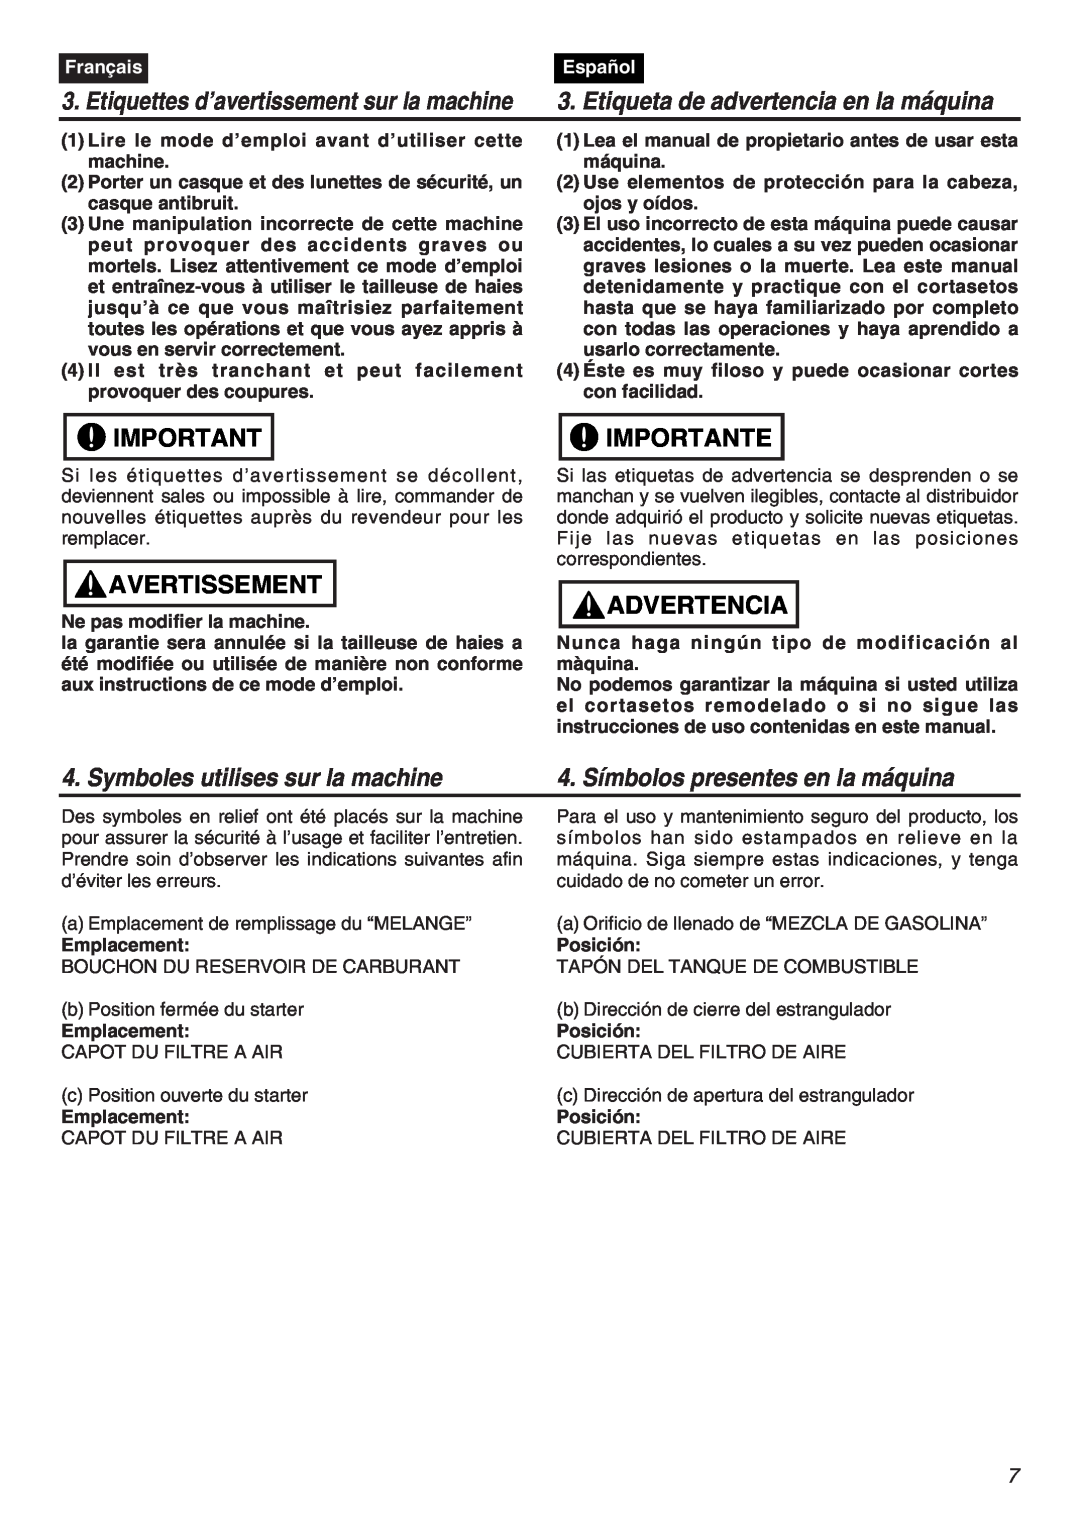 RedMax CHTZ2401L-CA manual Symboles utilises sur la machine, 4. Símbolos presentes en la máquina, Avertissement, Importante 